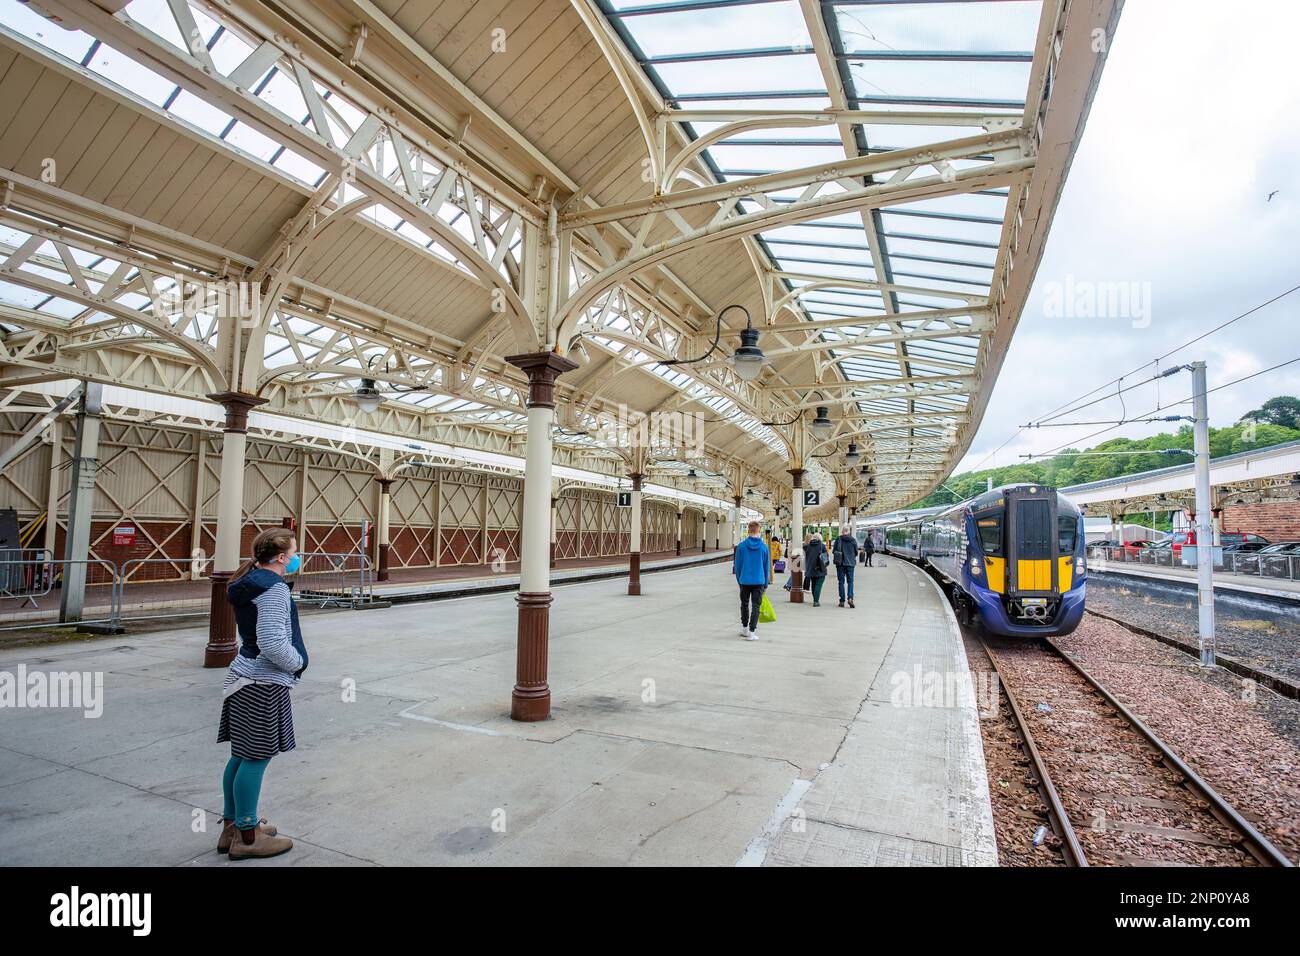 Wemyss Bay Train Station interior, Scotland, United Kingdom Stock Photo